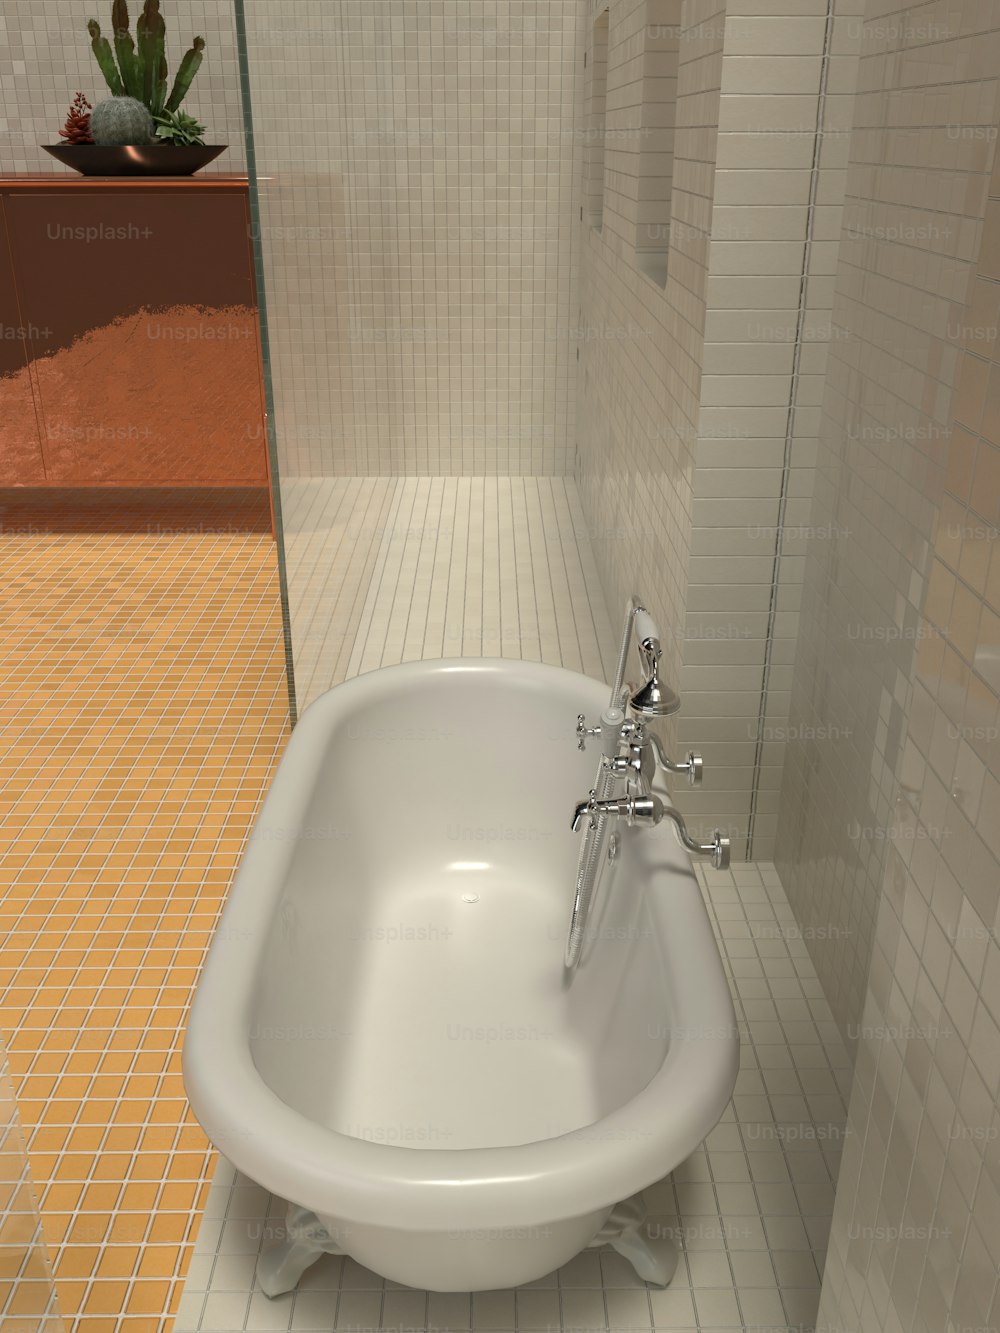 una vasca da bagno bianca seduta all'interno di un bagno